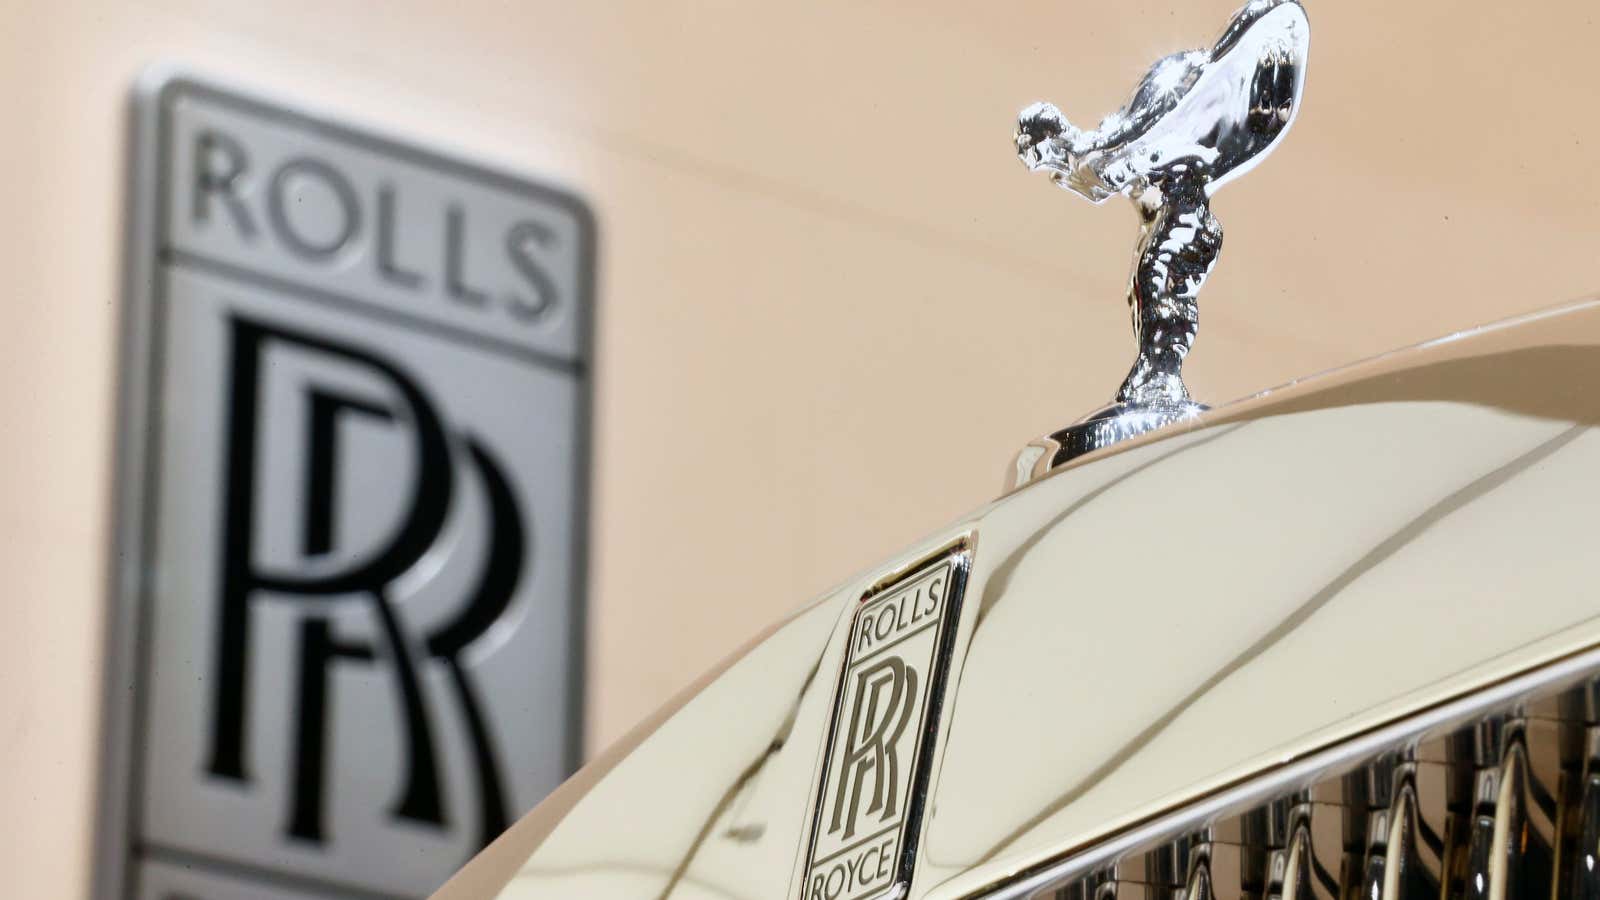 The Rolls-Royce logo